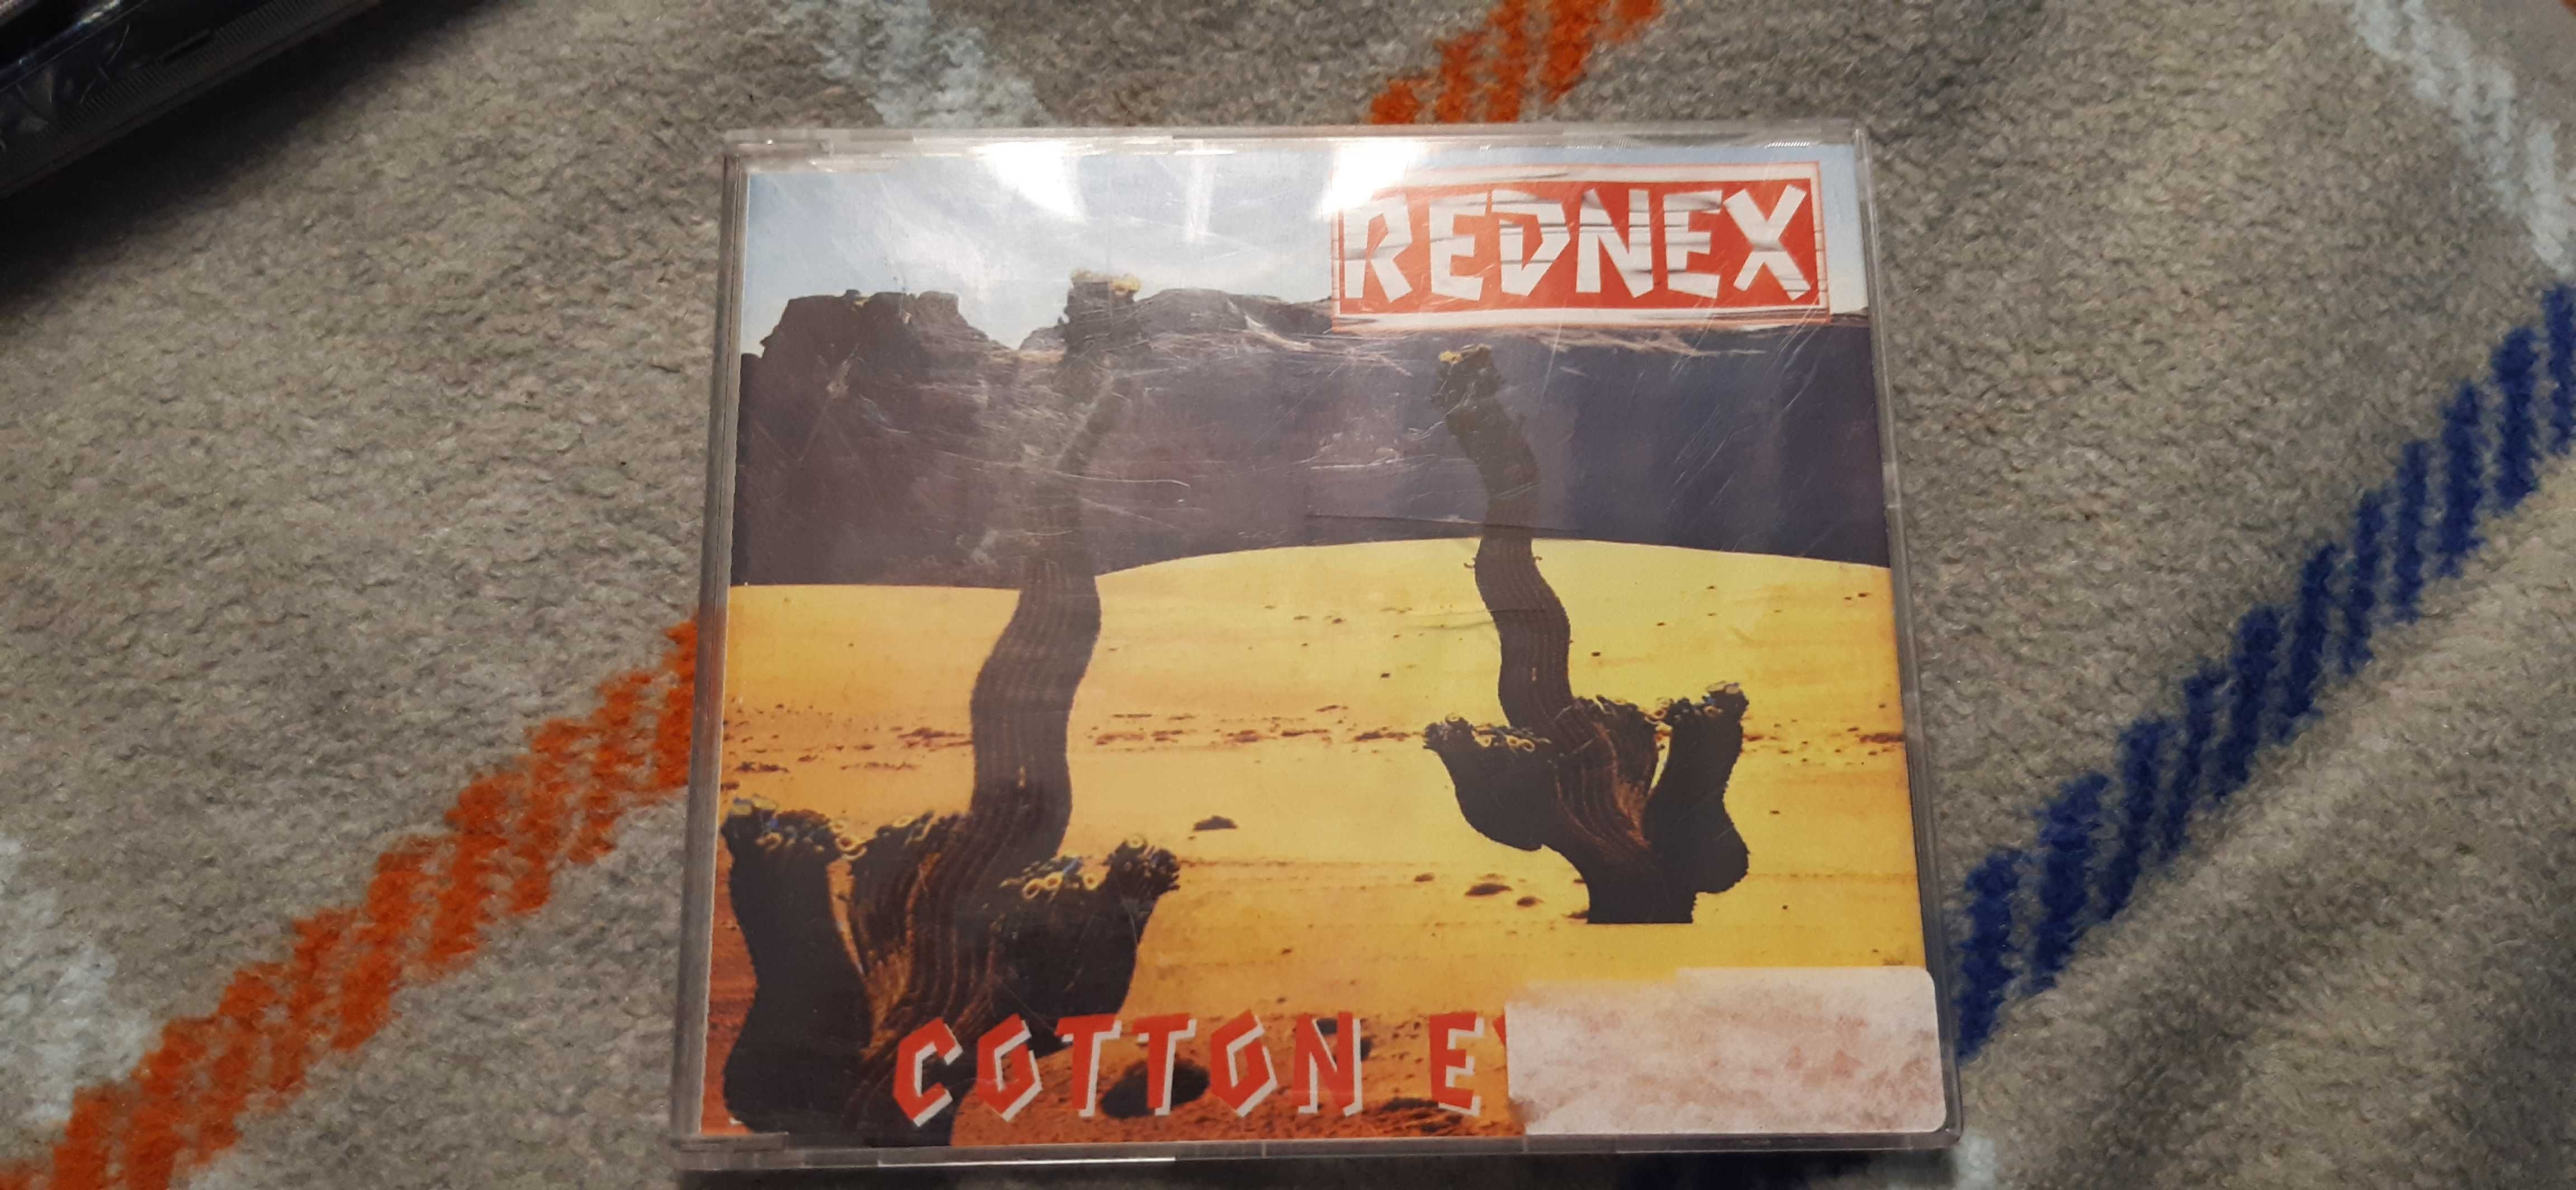 płyta cd singiel rednex gotton eye joe